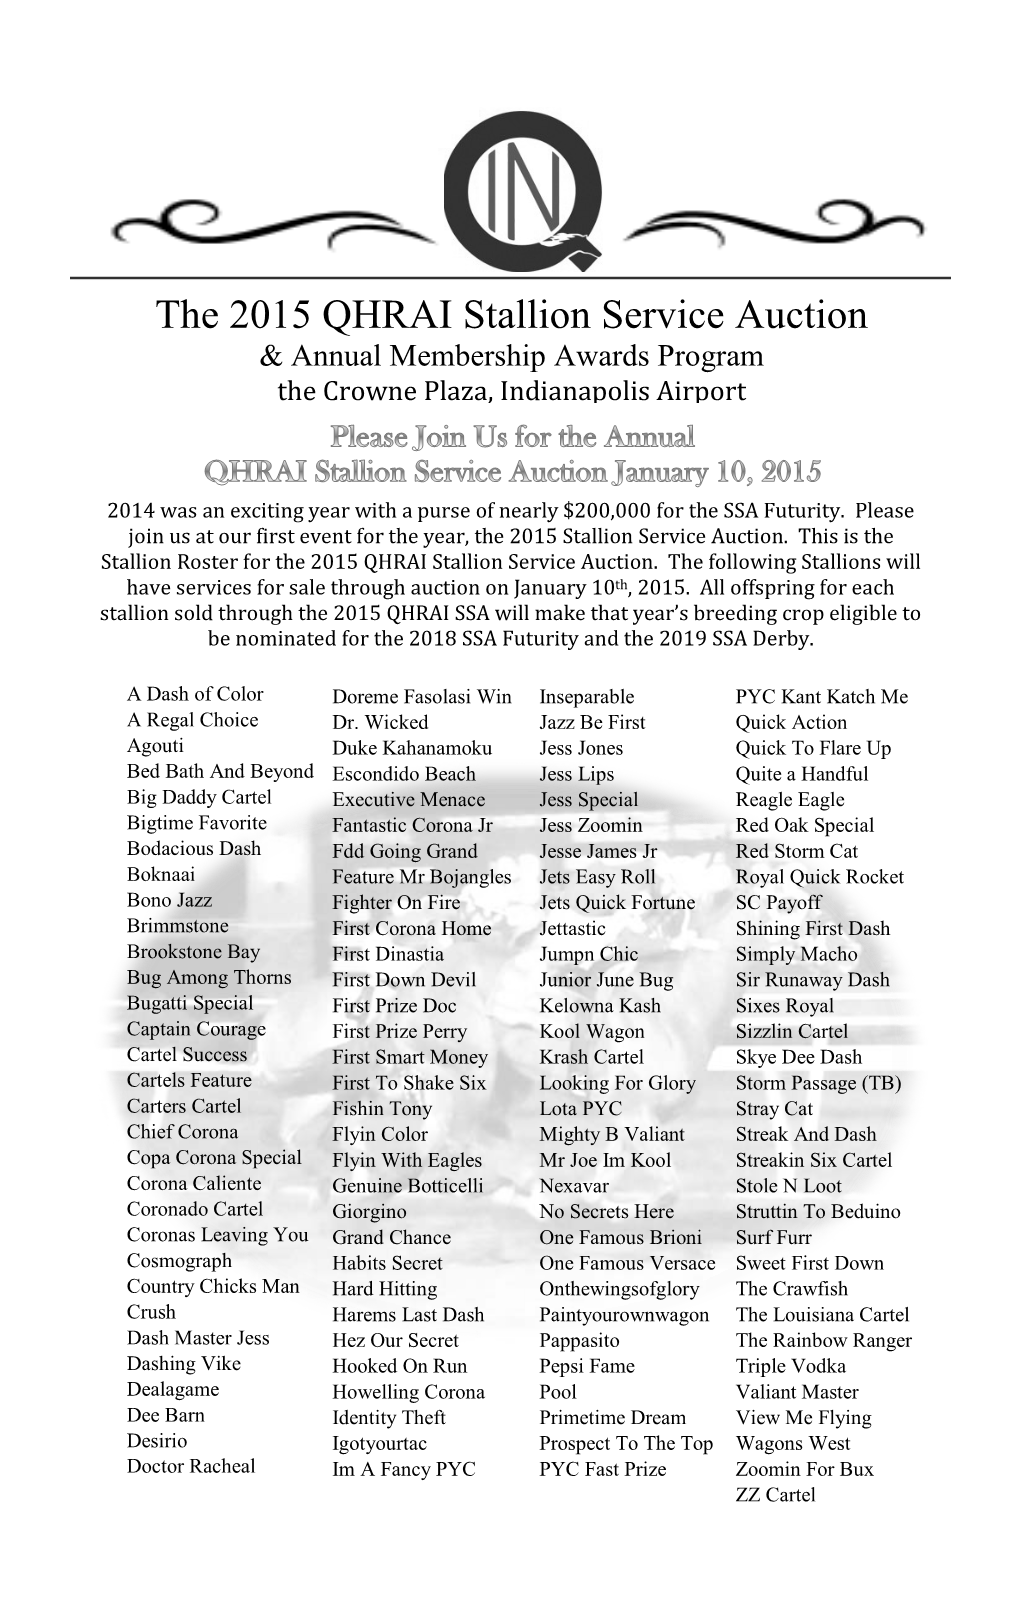 The 2015 QHRAI Stallion Service Auction